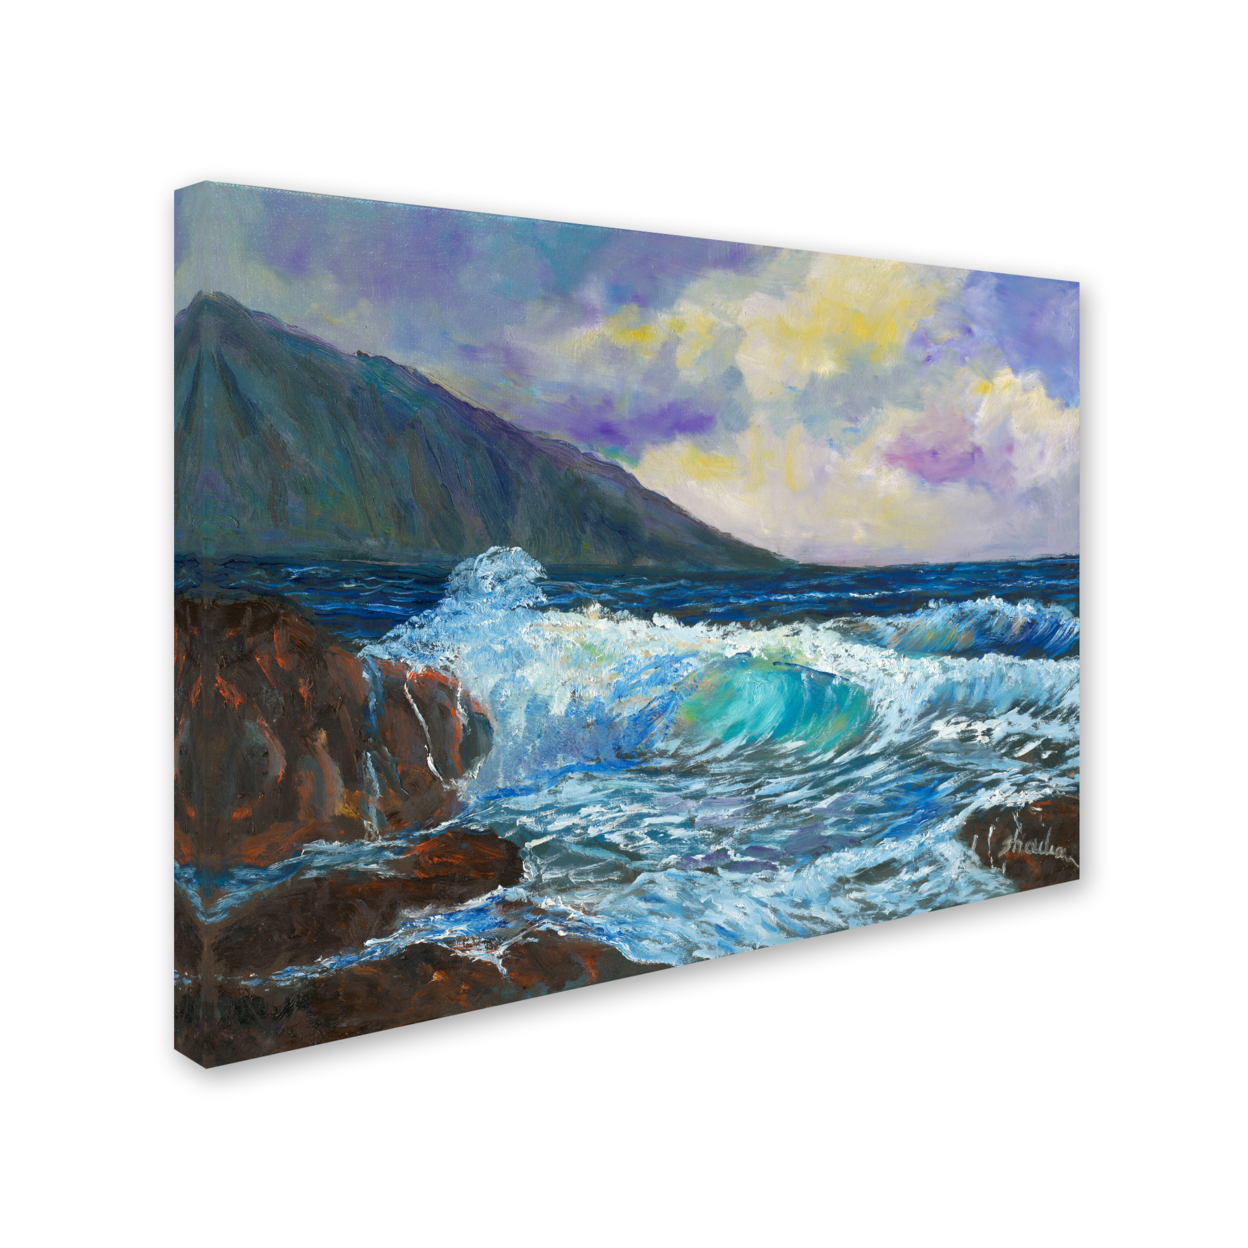 Manor Shadian 'Maui's Enchanting Seas' 14 X 19 Canvas Art